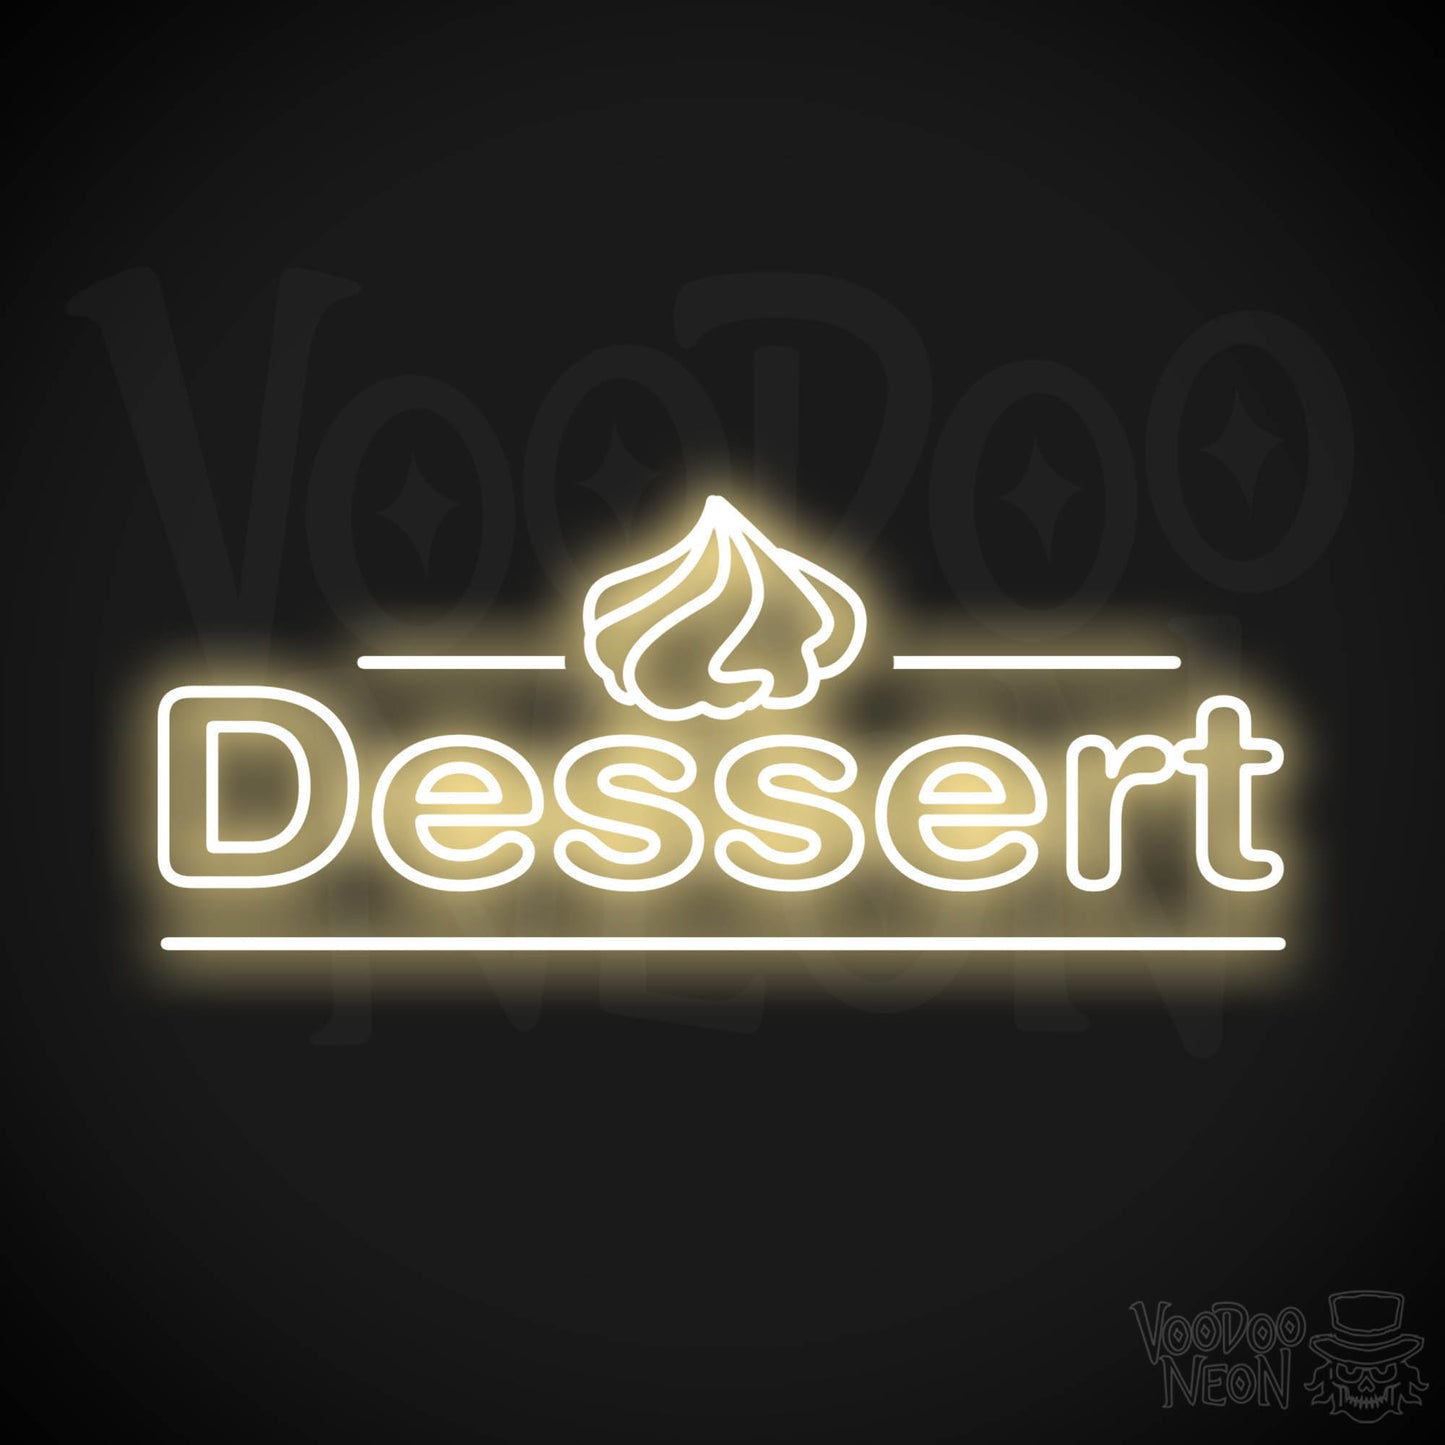 Dessert LED Neon - Warm White